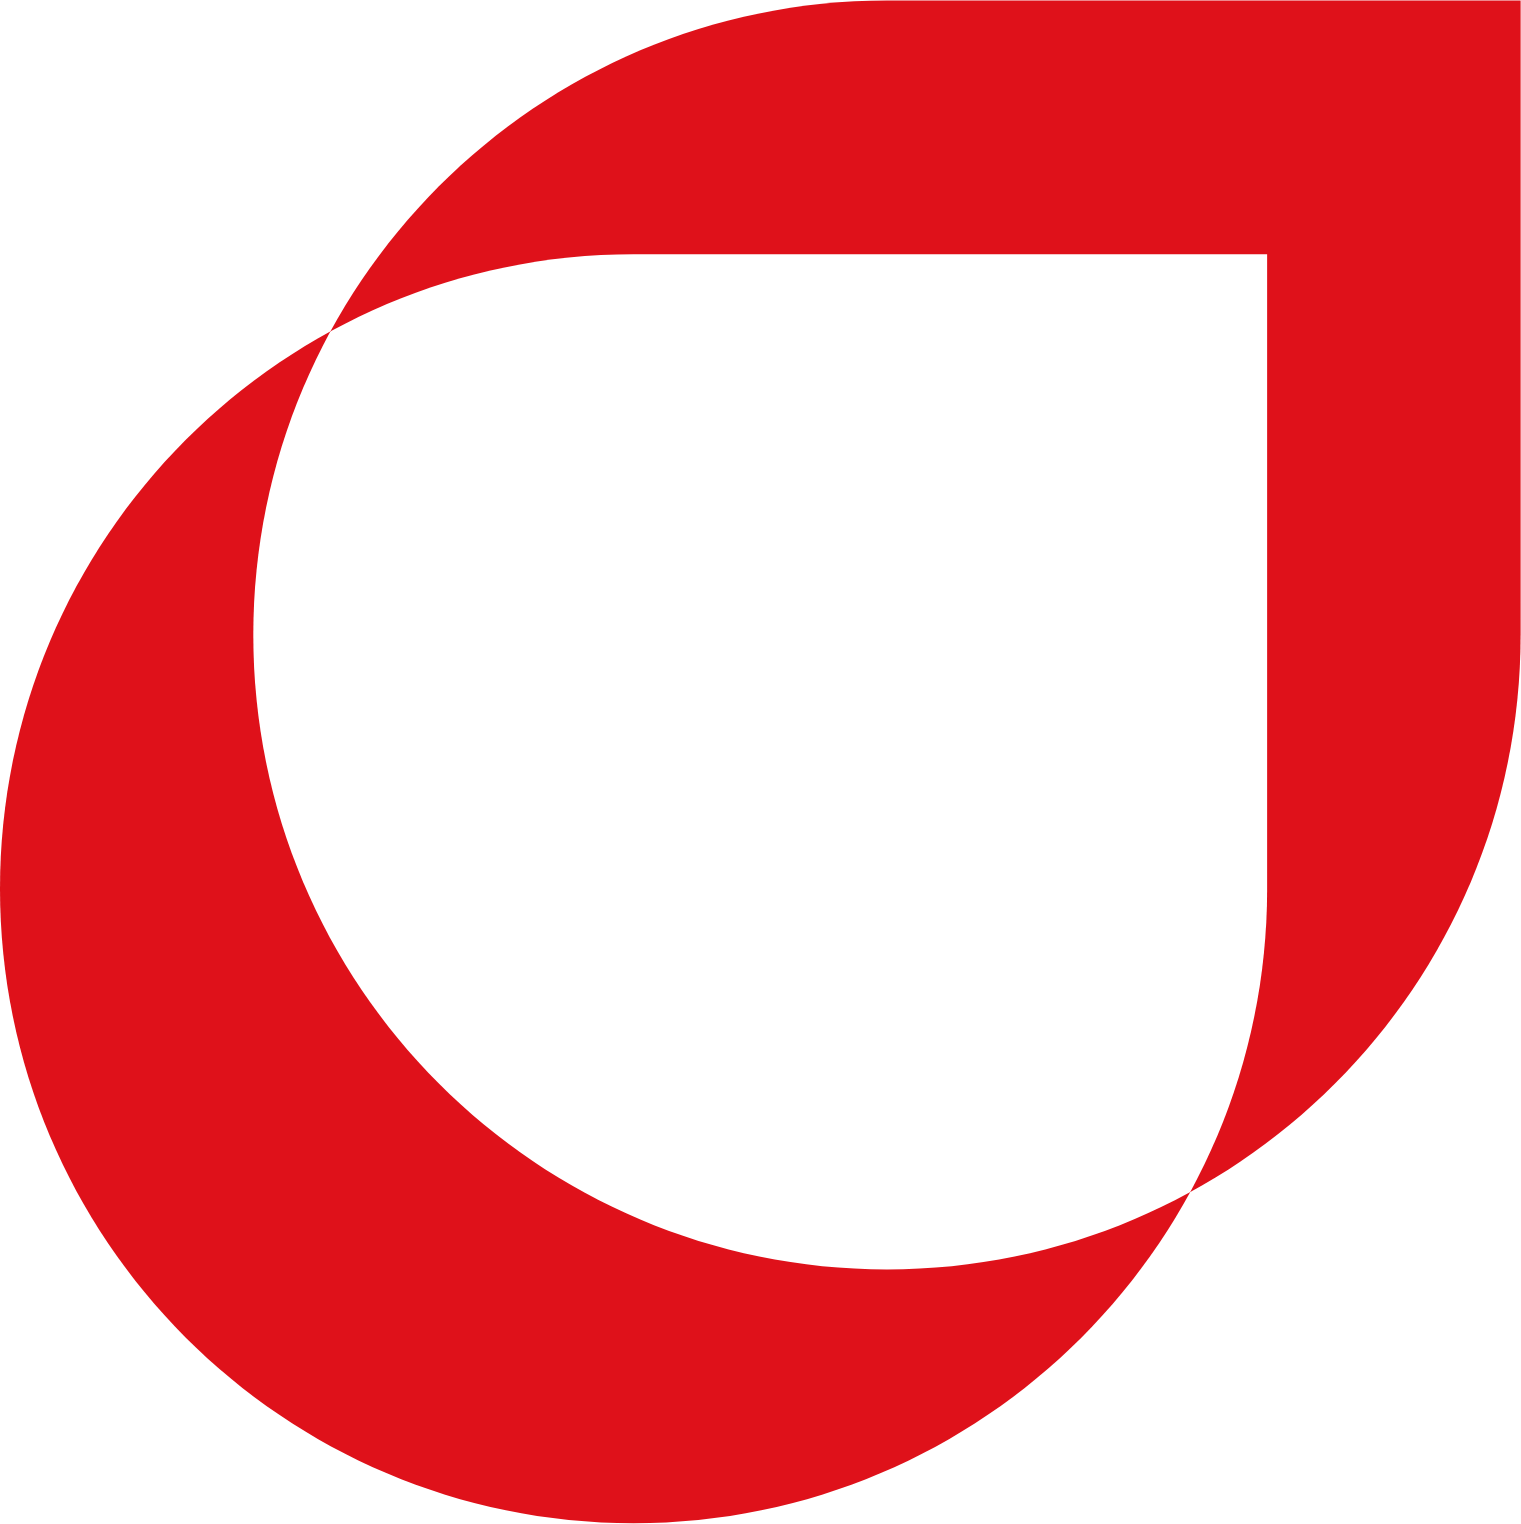 Türkiye Petrol Rafinerileri logo in transparent PNG and vectorized SVG ...